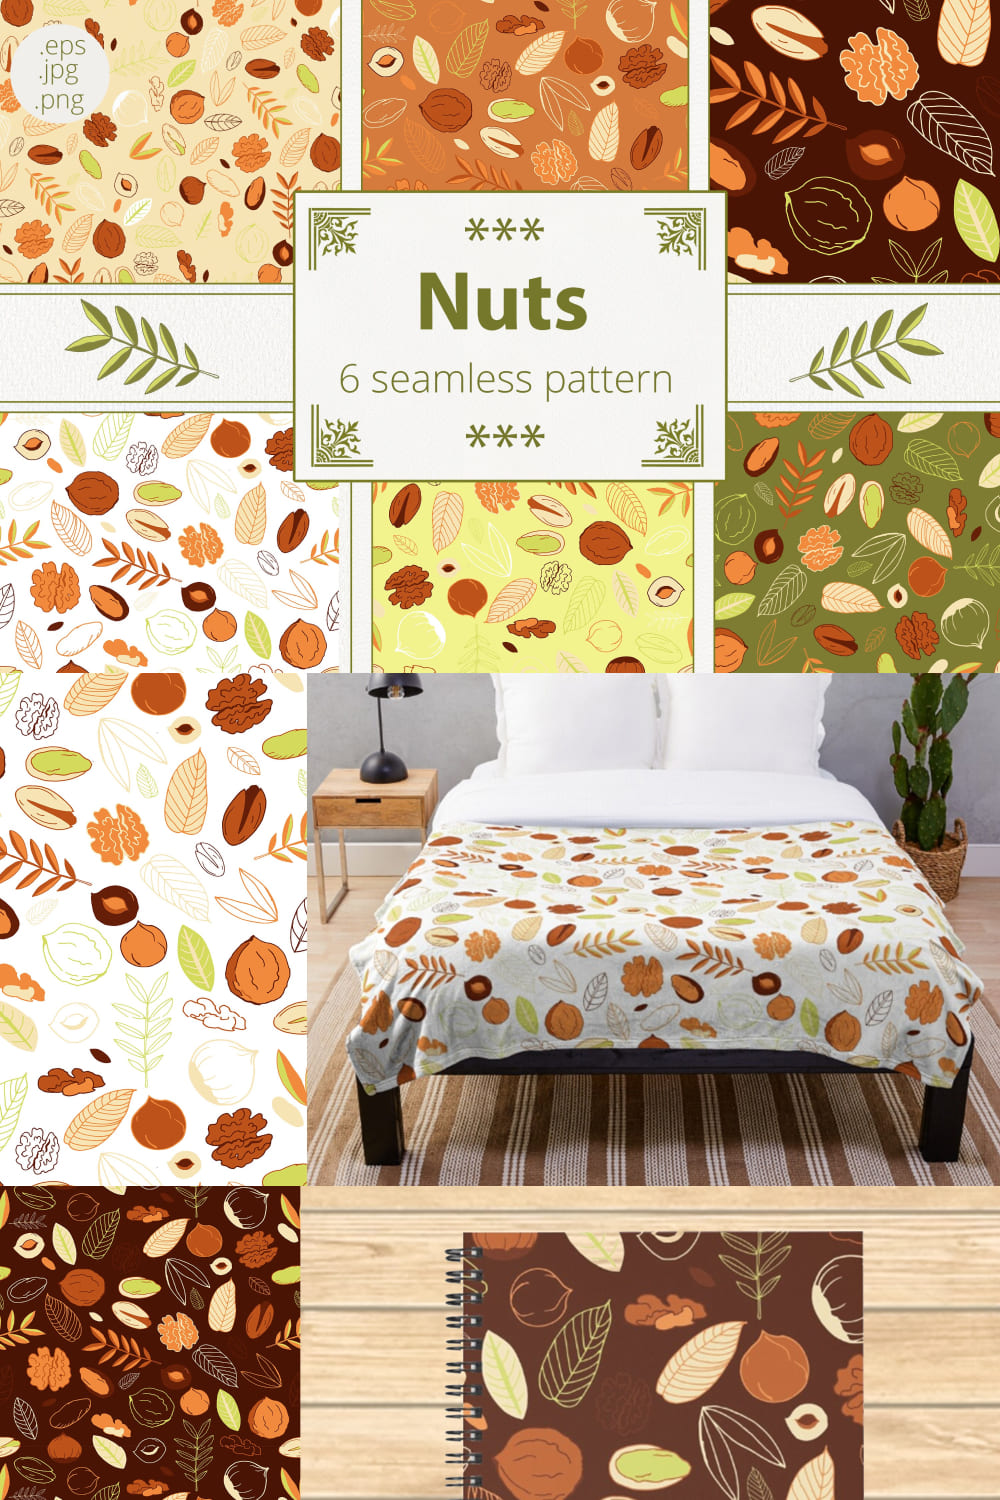 Nuts. Seamless Patterns - Pinterest.